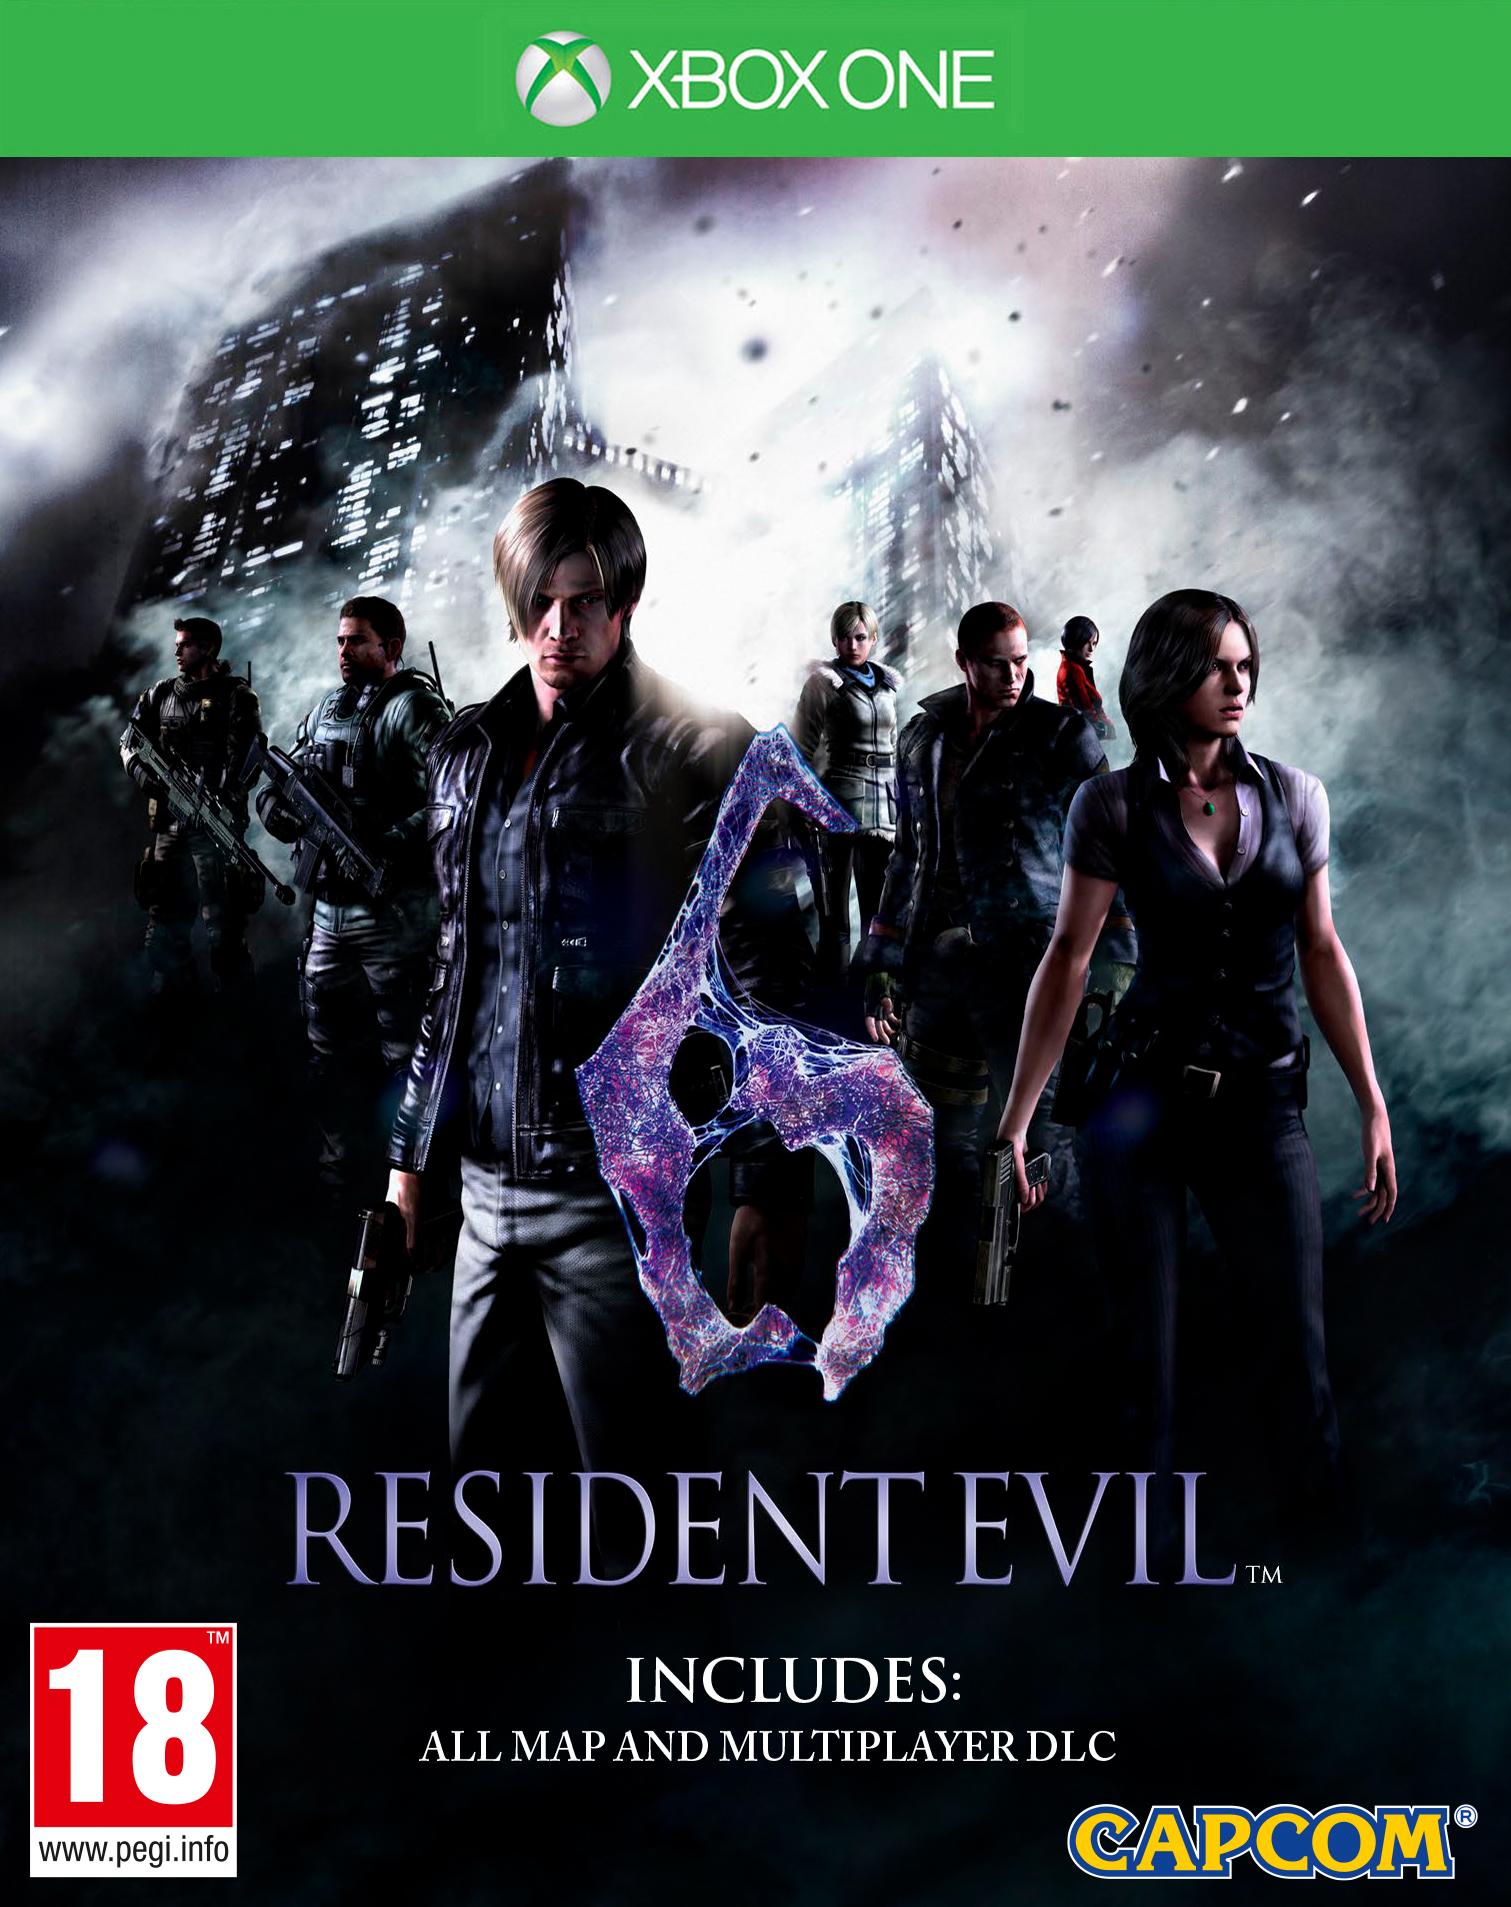 Resident Evil 6 Remastered (Xbox One), Capcom